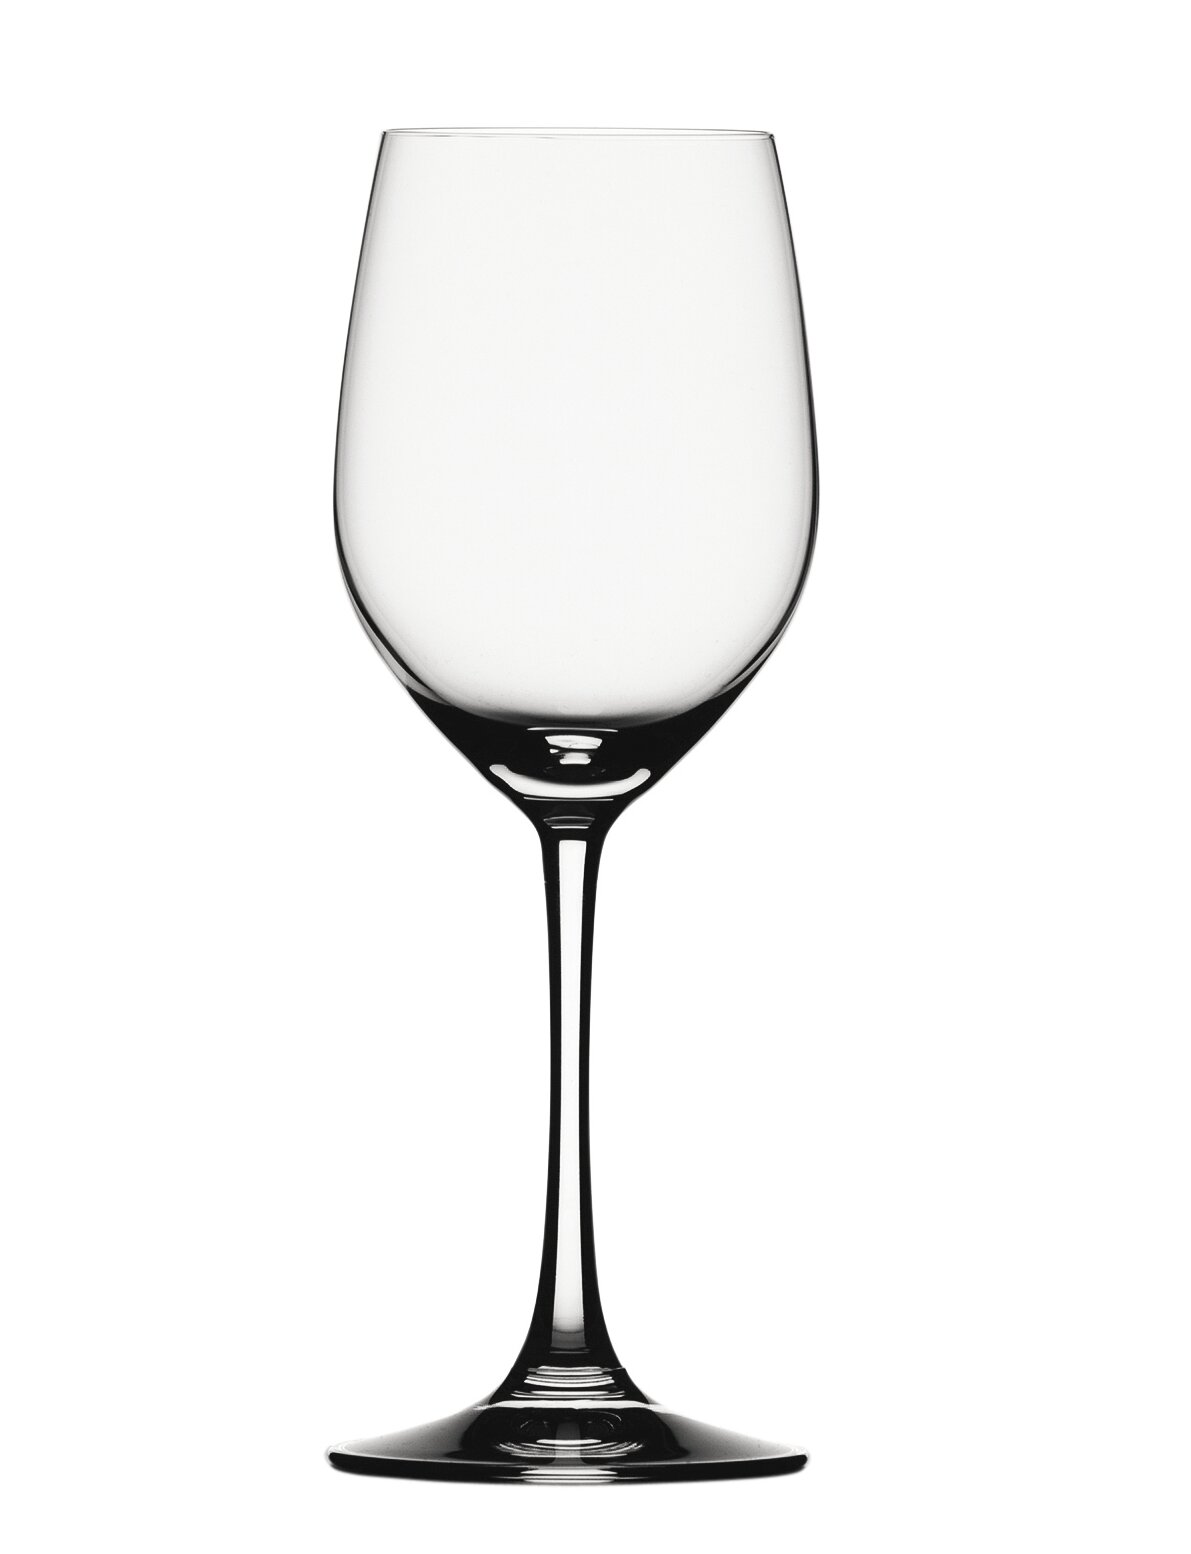 NEW Spiegelau Vino Grande Wine Decanter 1 Liter Lead Free Crystal 